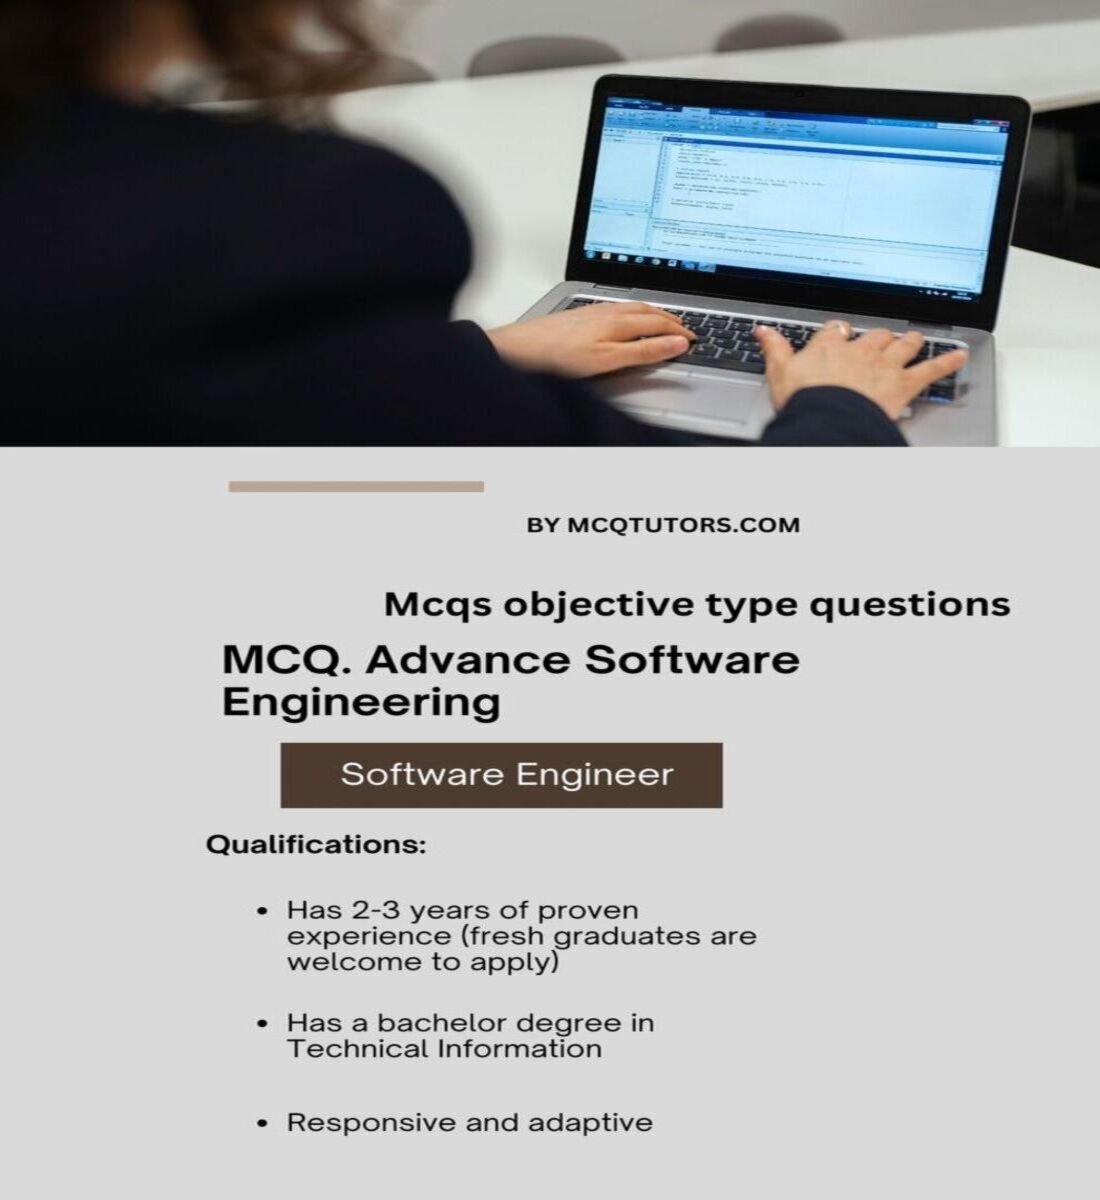 MCQ. Advance Software Engineering